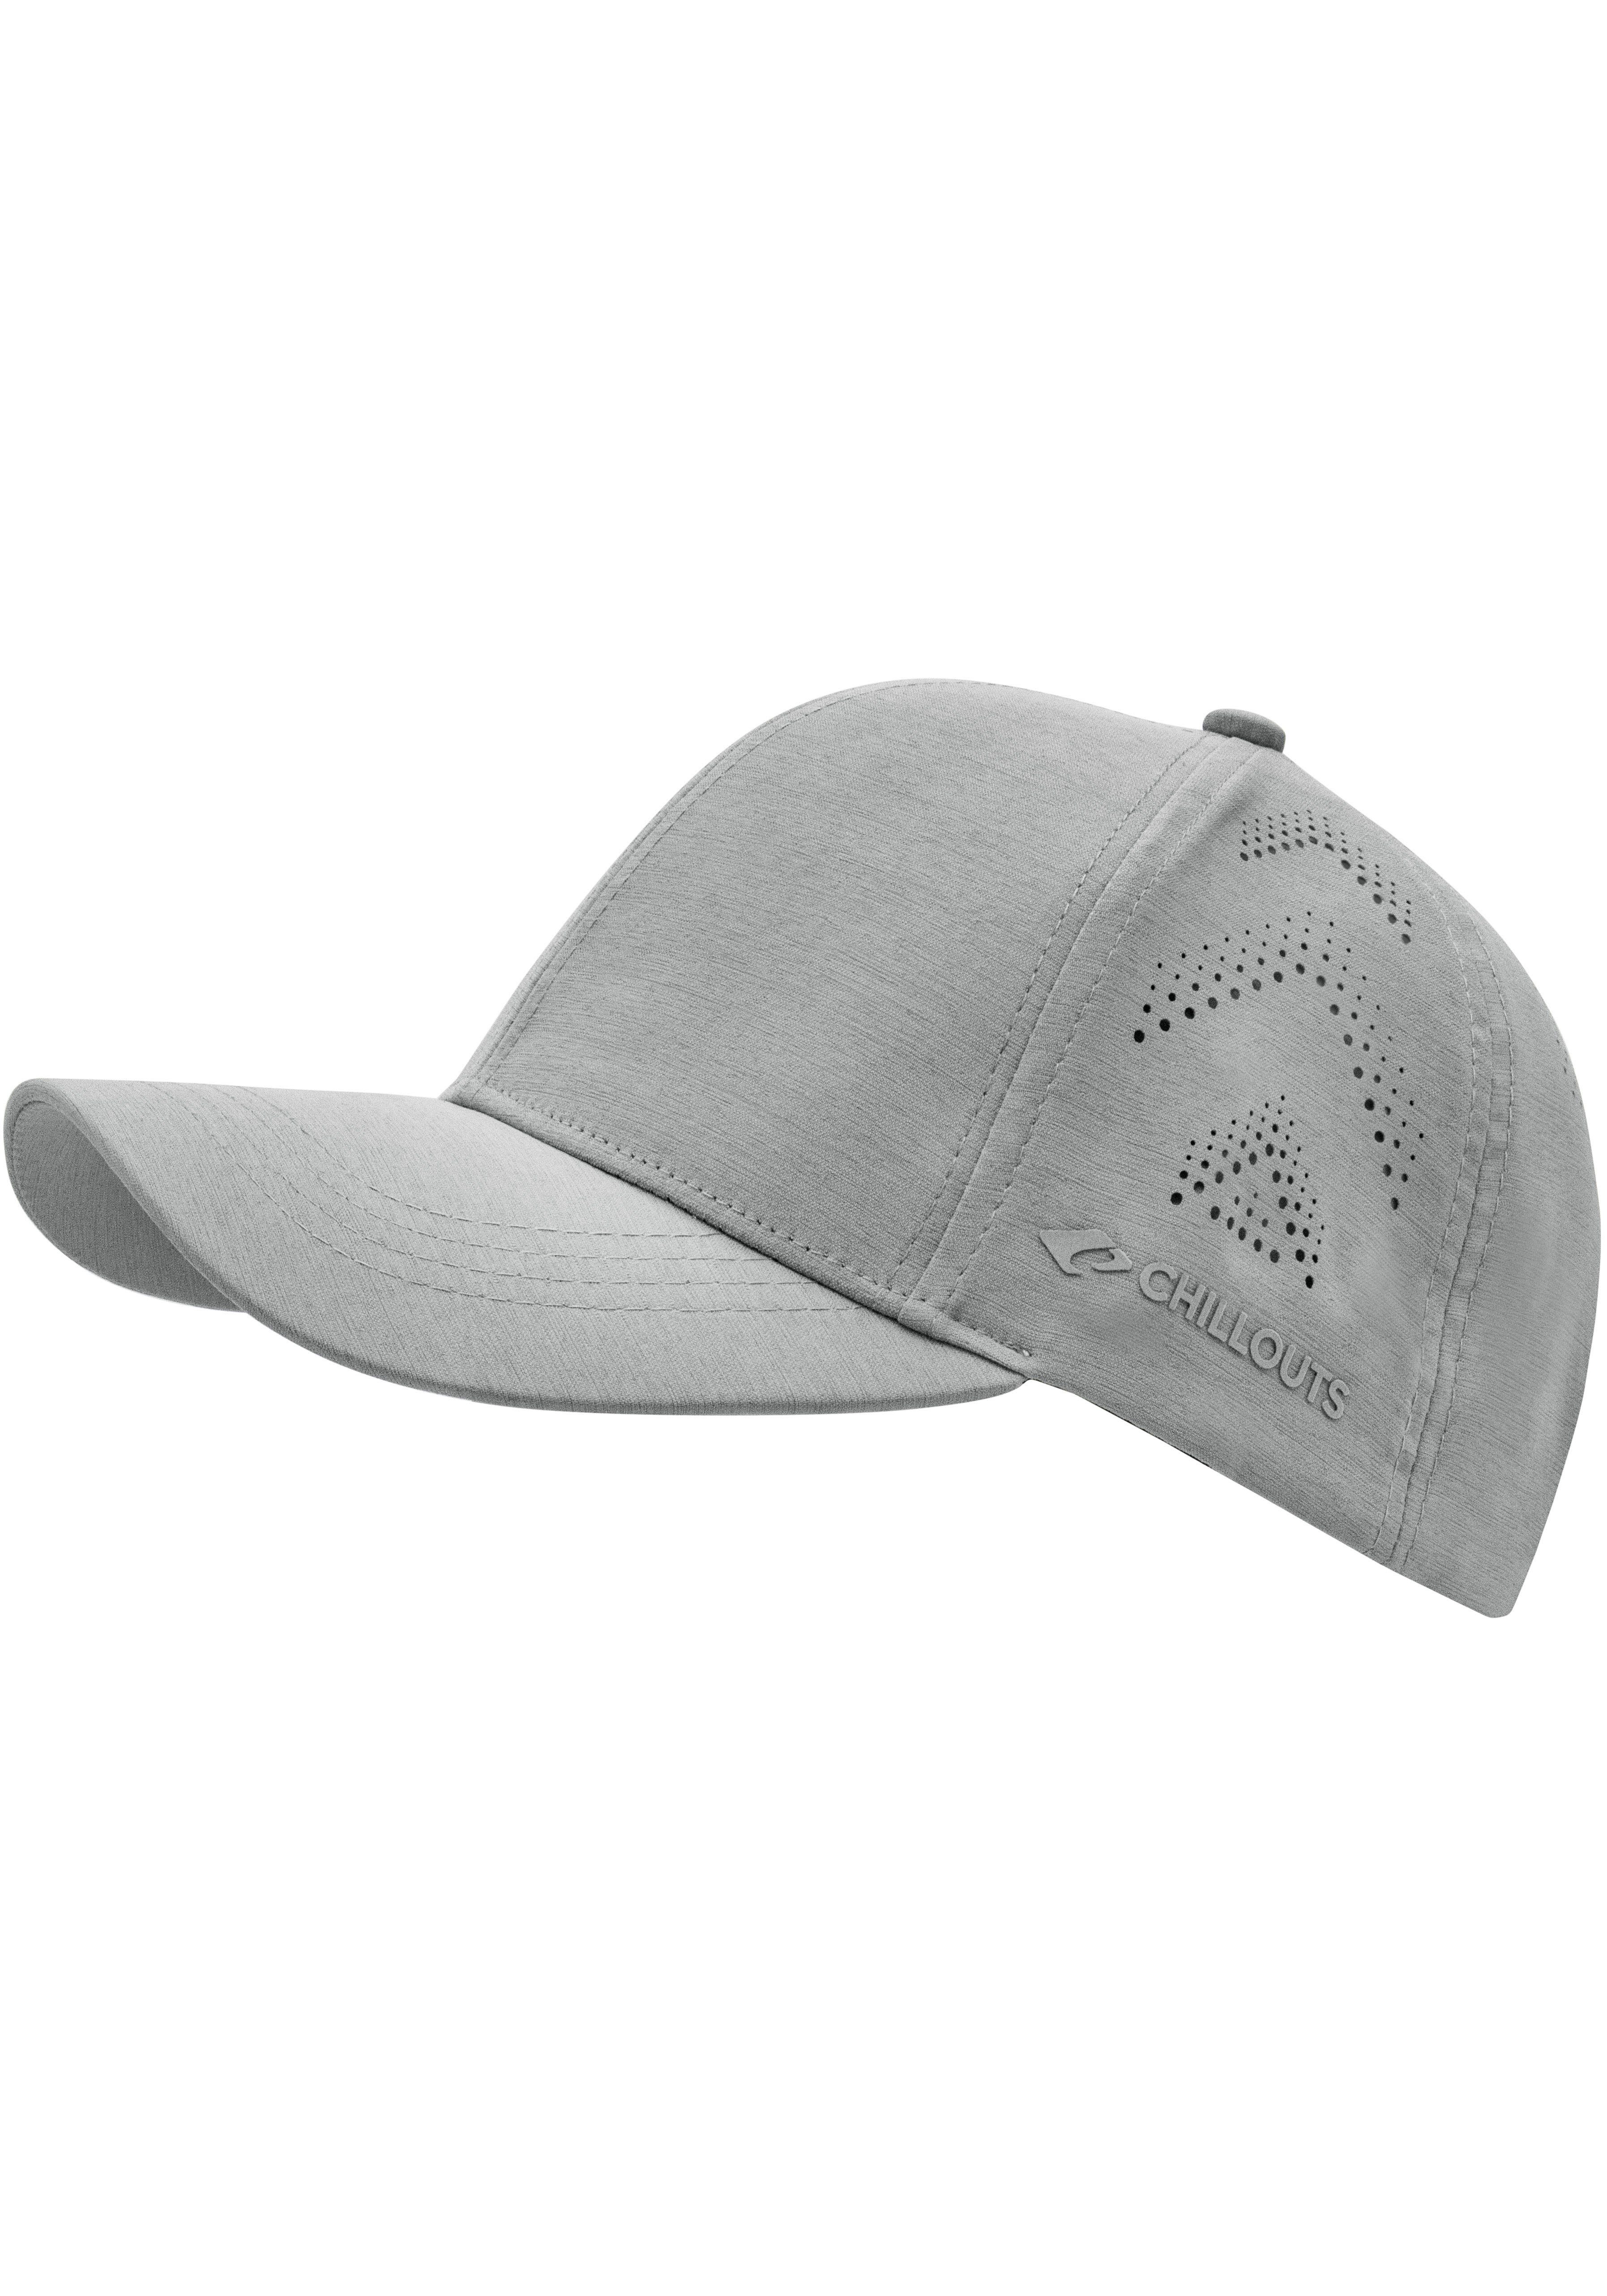 chillouts Baseball Cap Philadelphia Hat, Cap mit Klettverschluß, UPF50+ hellgrau | Beanies